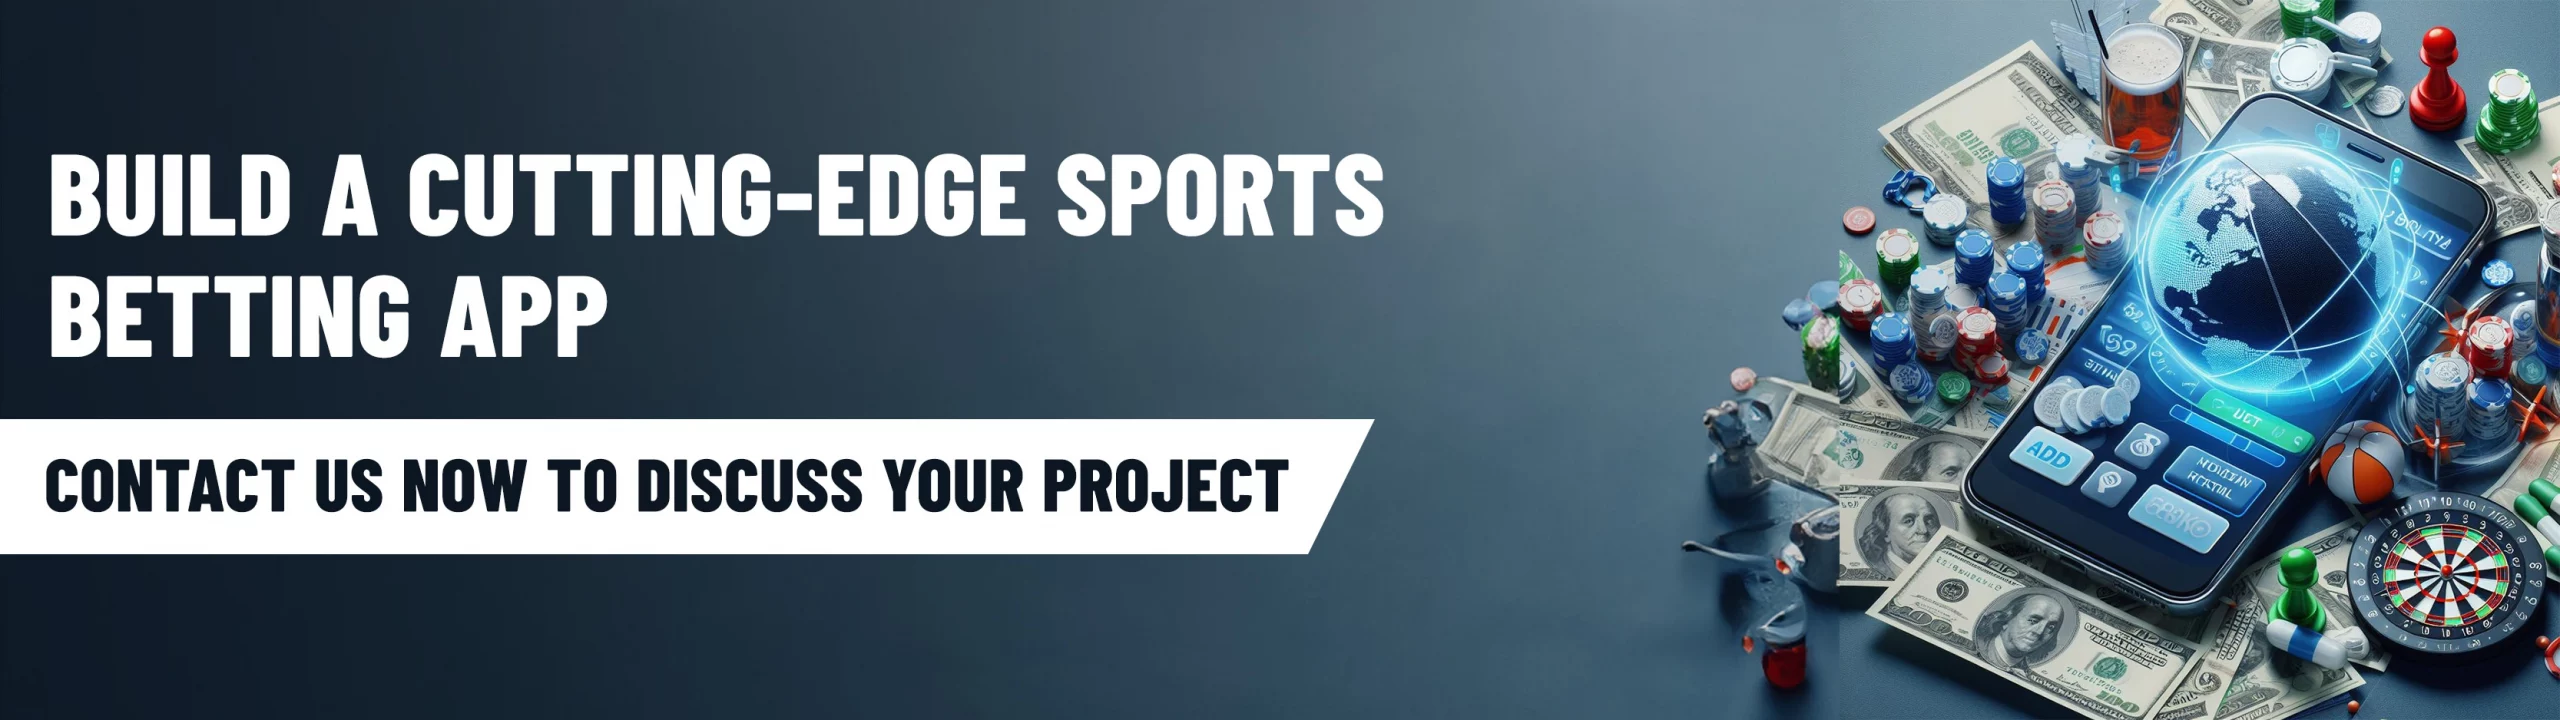 Build a Cutting-Edge Sports betting App